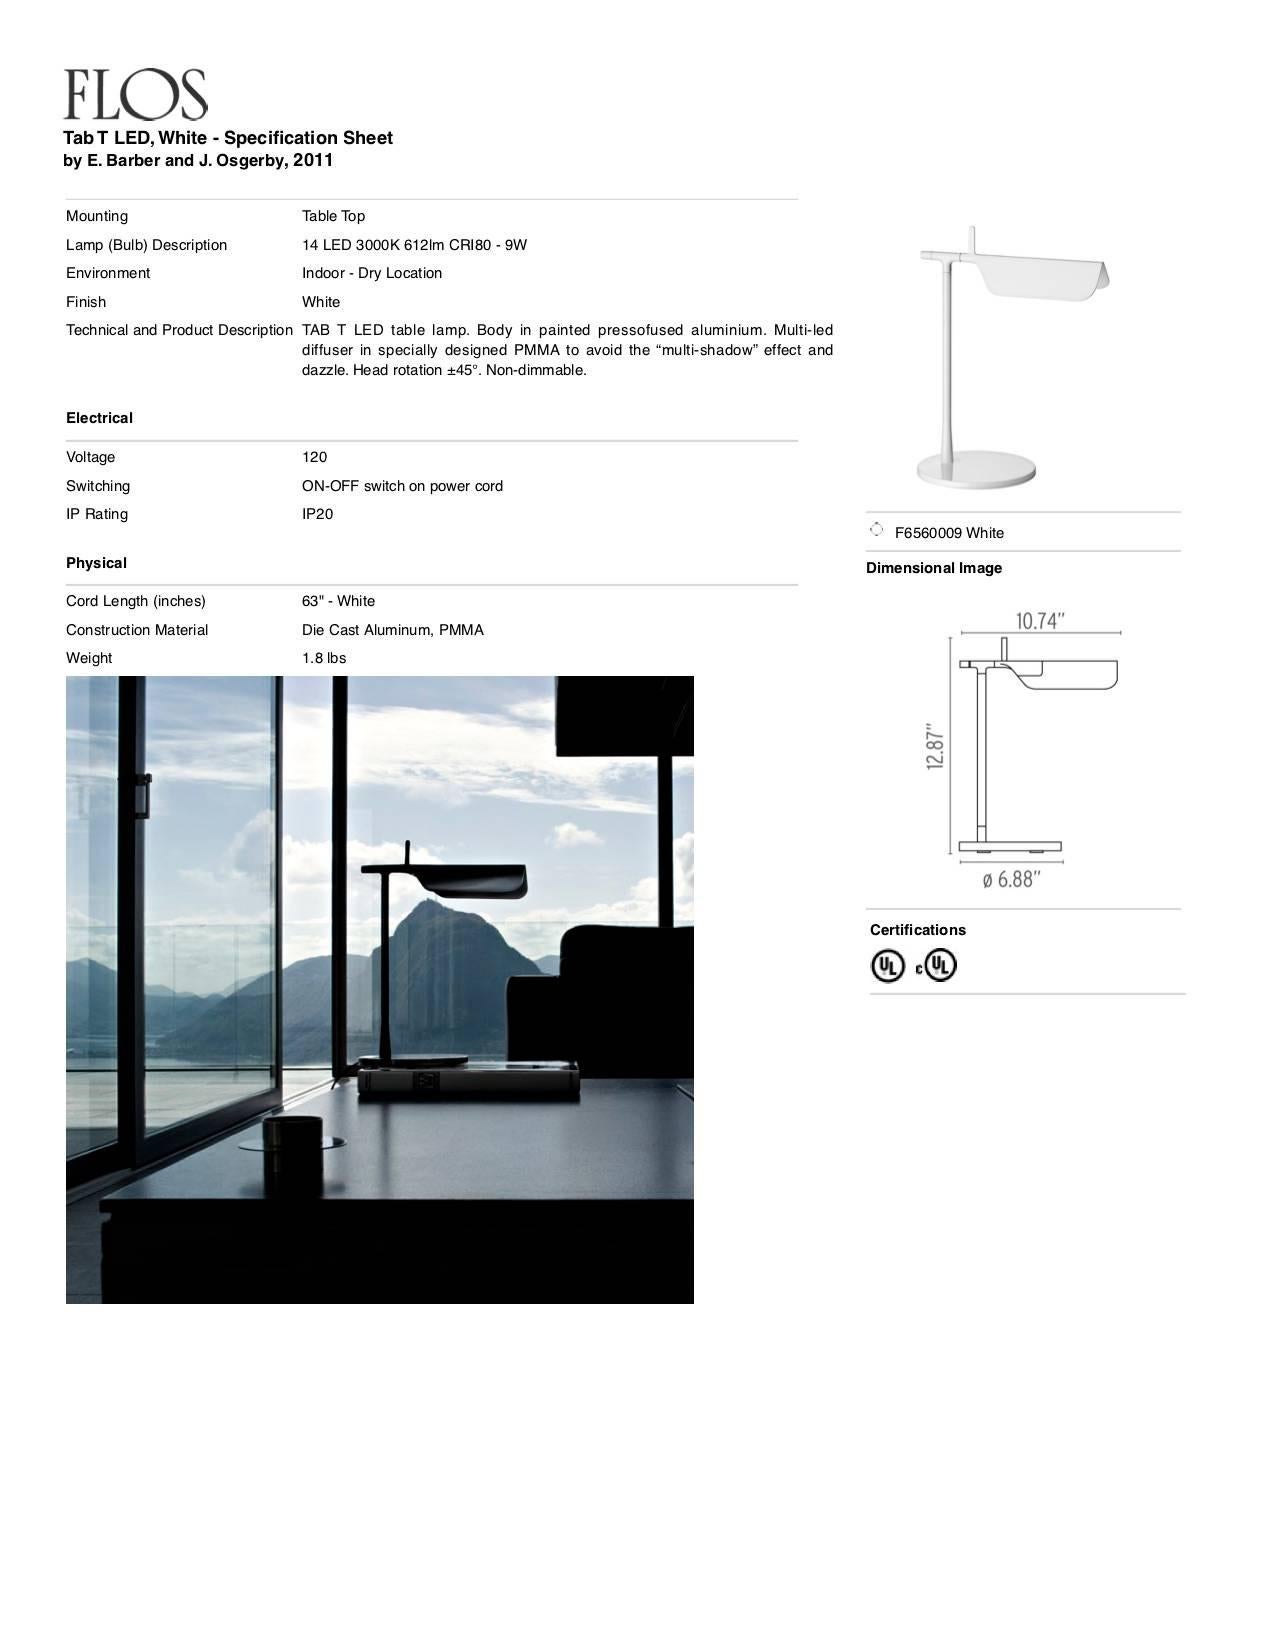 Modern FLOS Tab LED Table Lamp in White by E. Barber & J. Osgerby